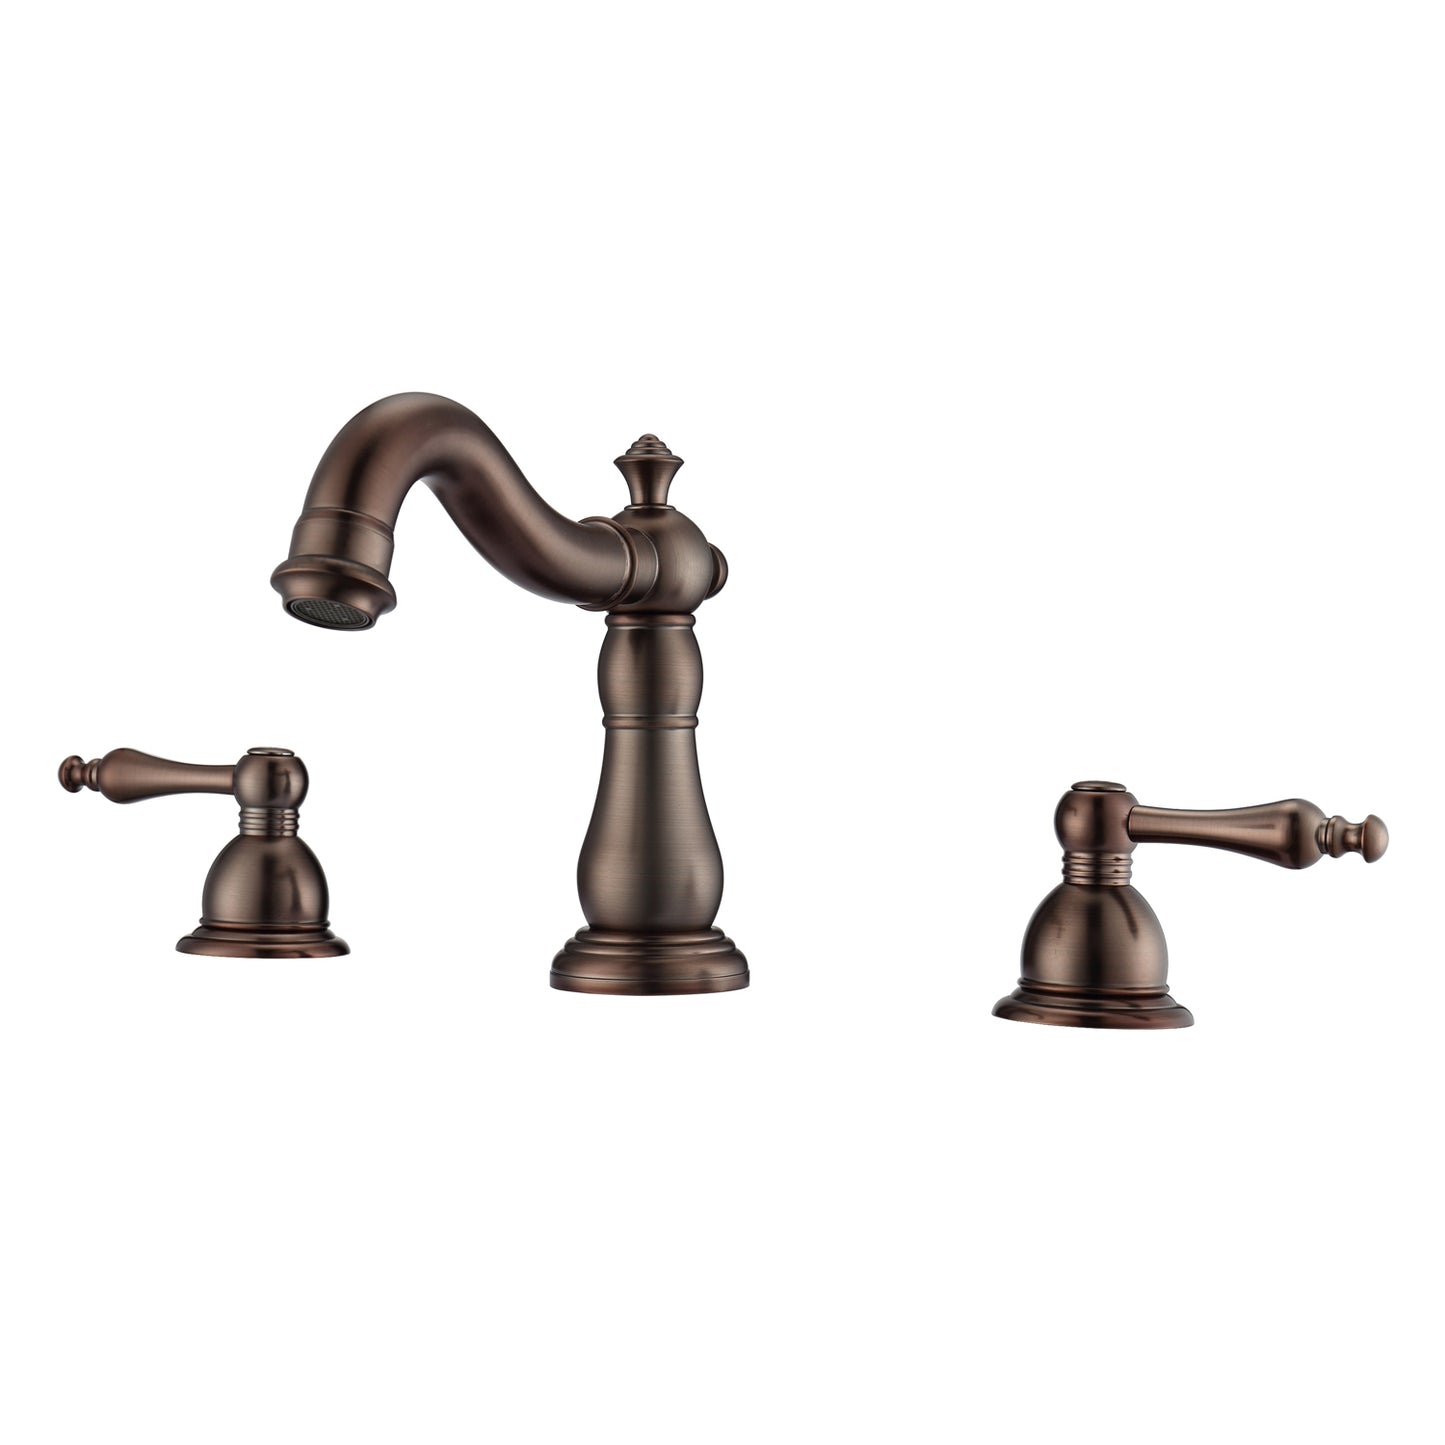 Aldora 8" Widespread Oil Rubbed Bronze Bathroom Faucet with Metal Lever Handles